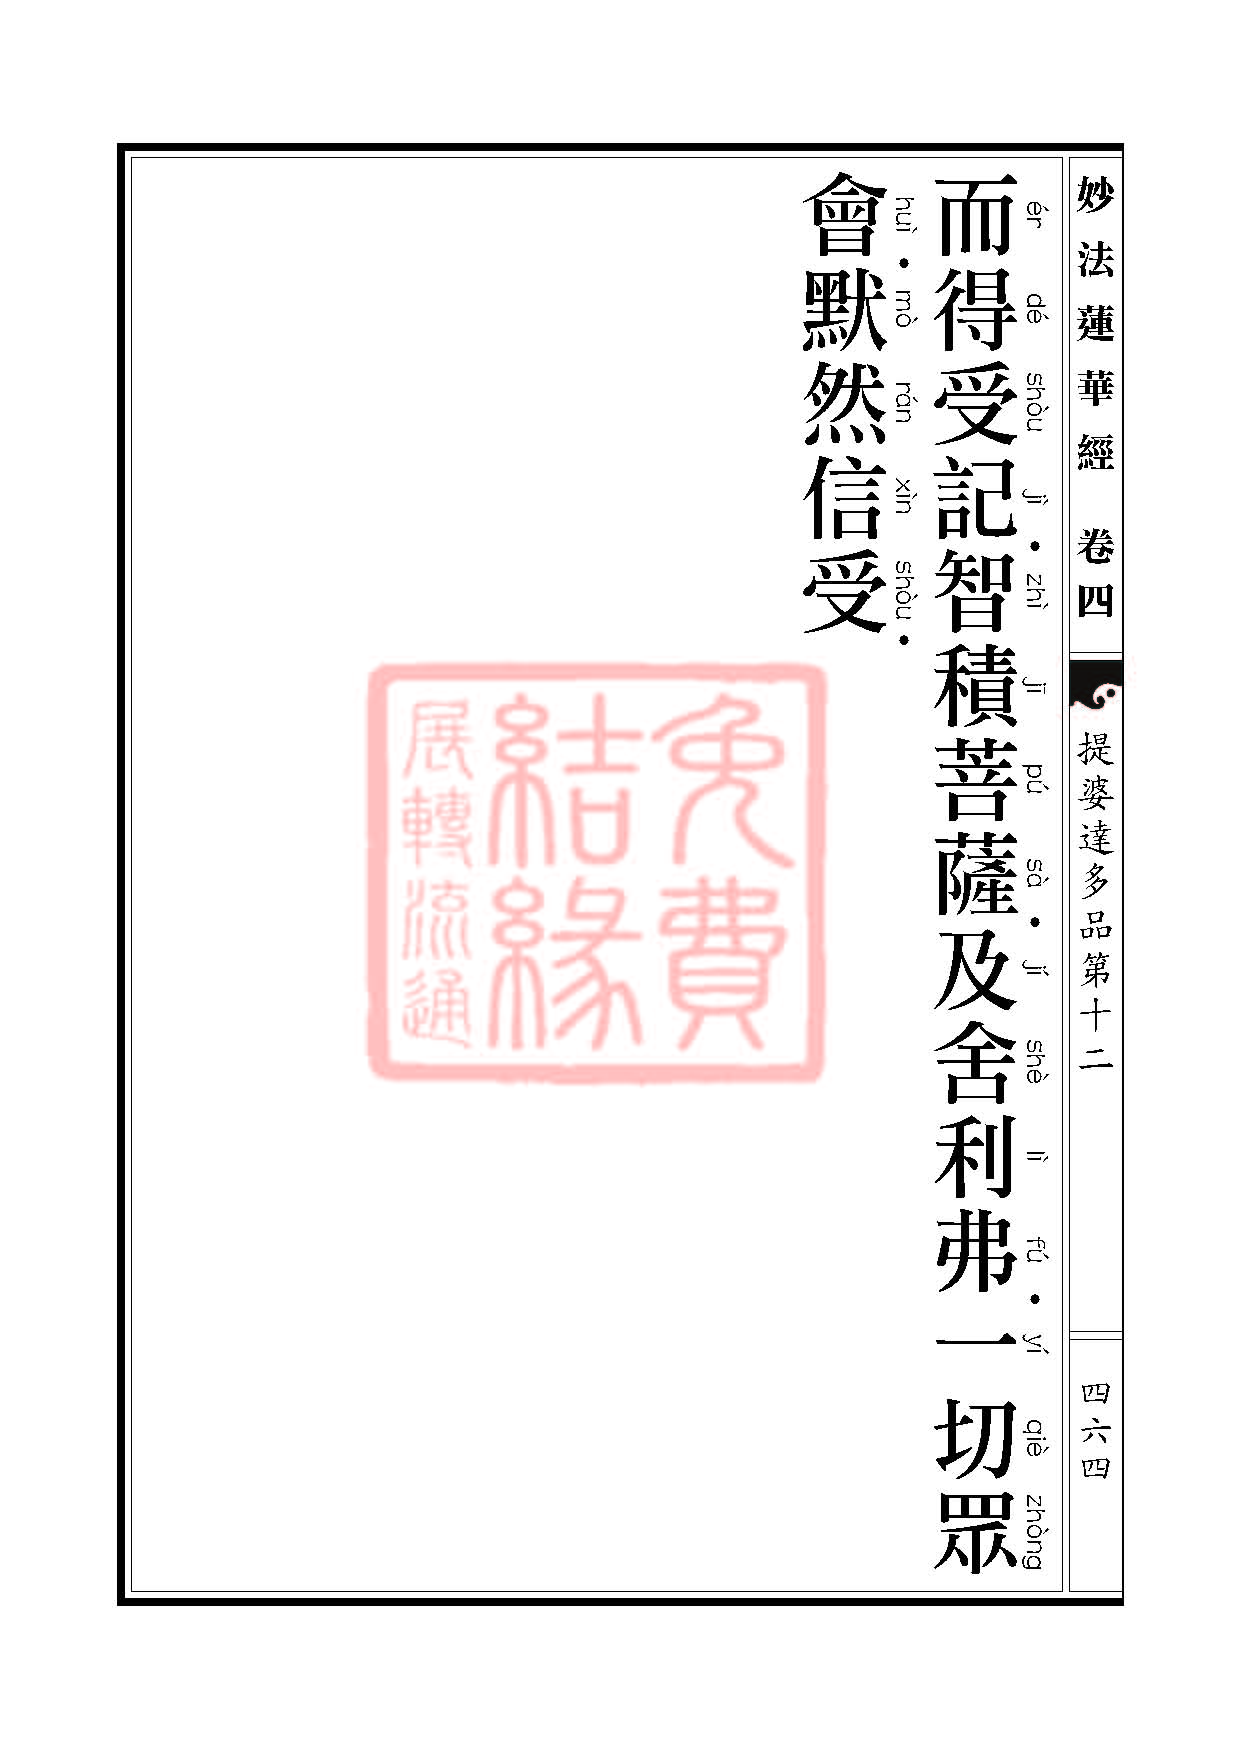 Book_FHJ_HK-A6-PY_Web_页面_464.jpg